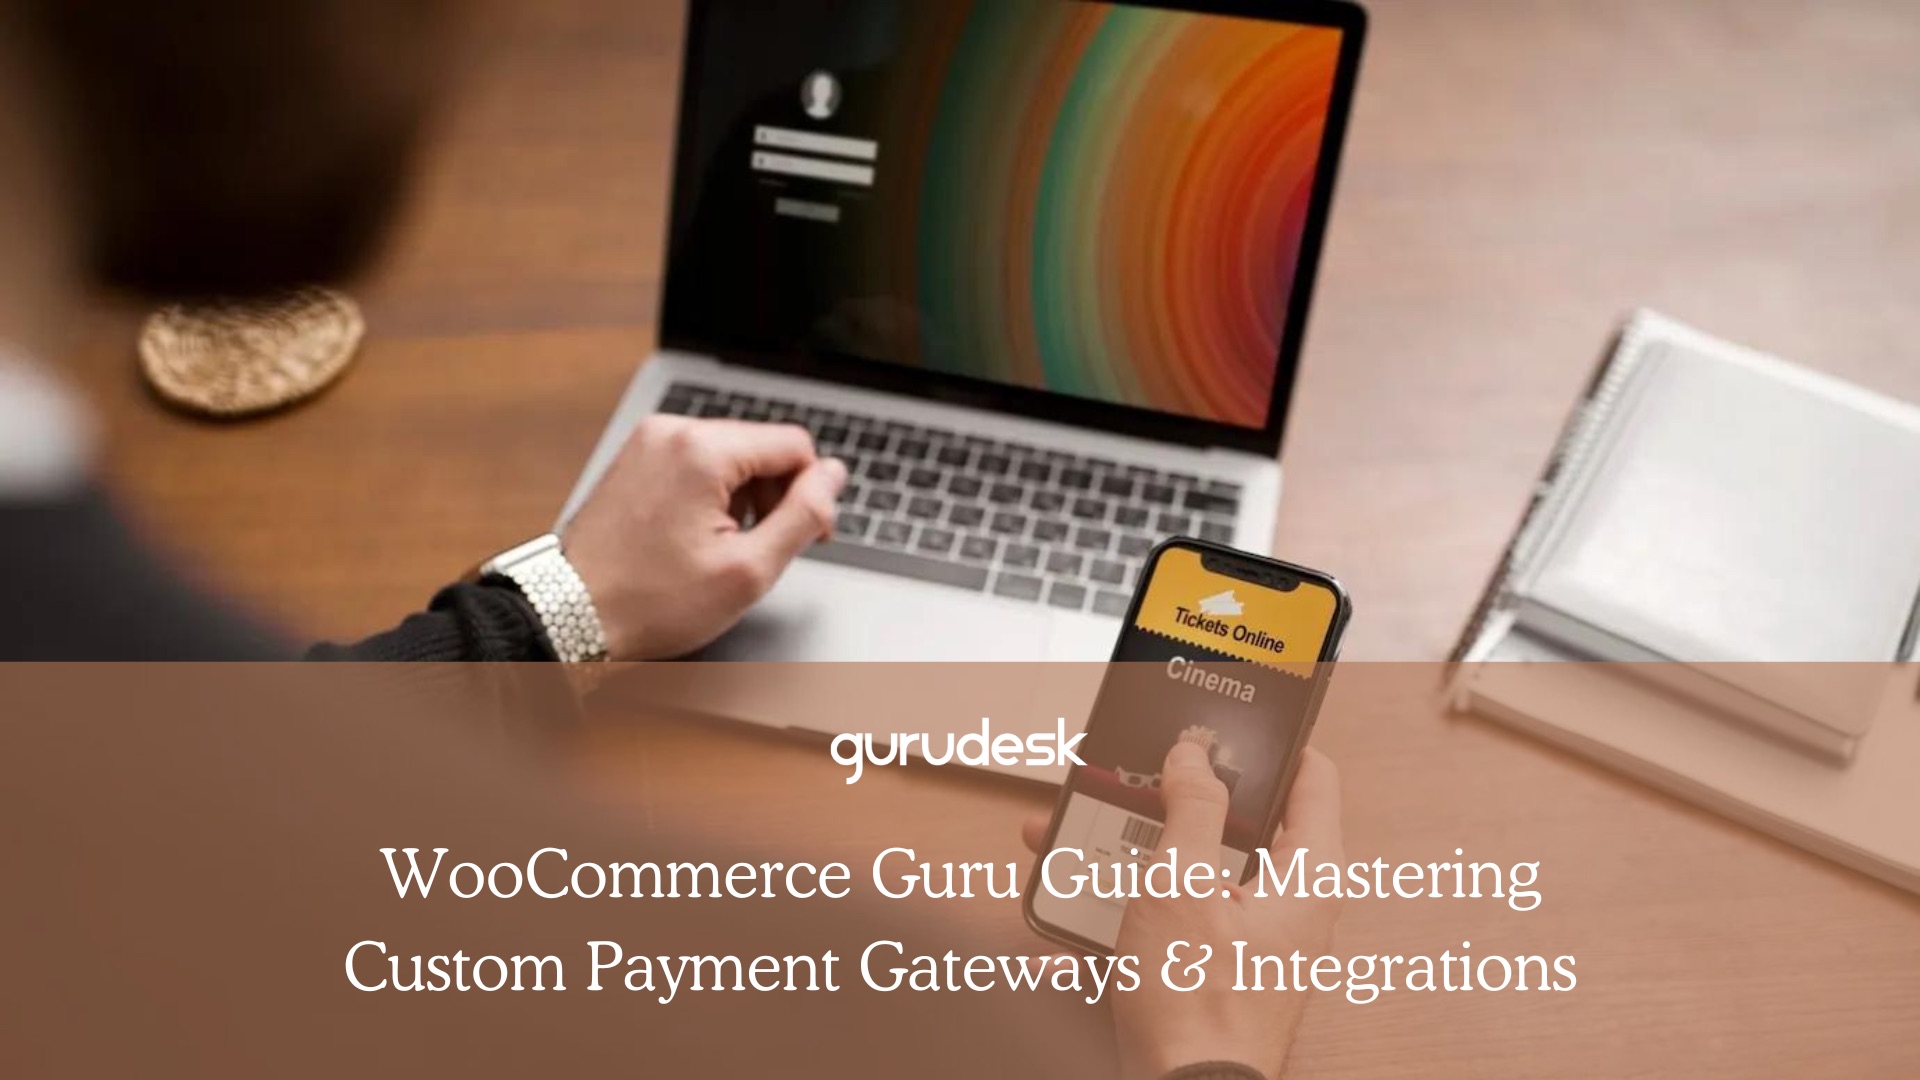 WooCommerce guru guide: custom payment gateways and integrations